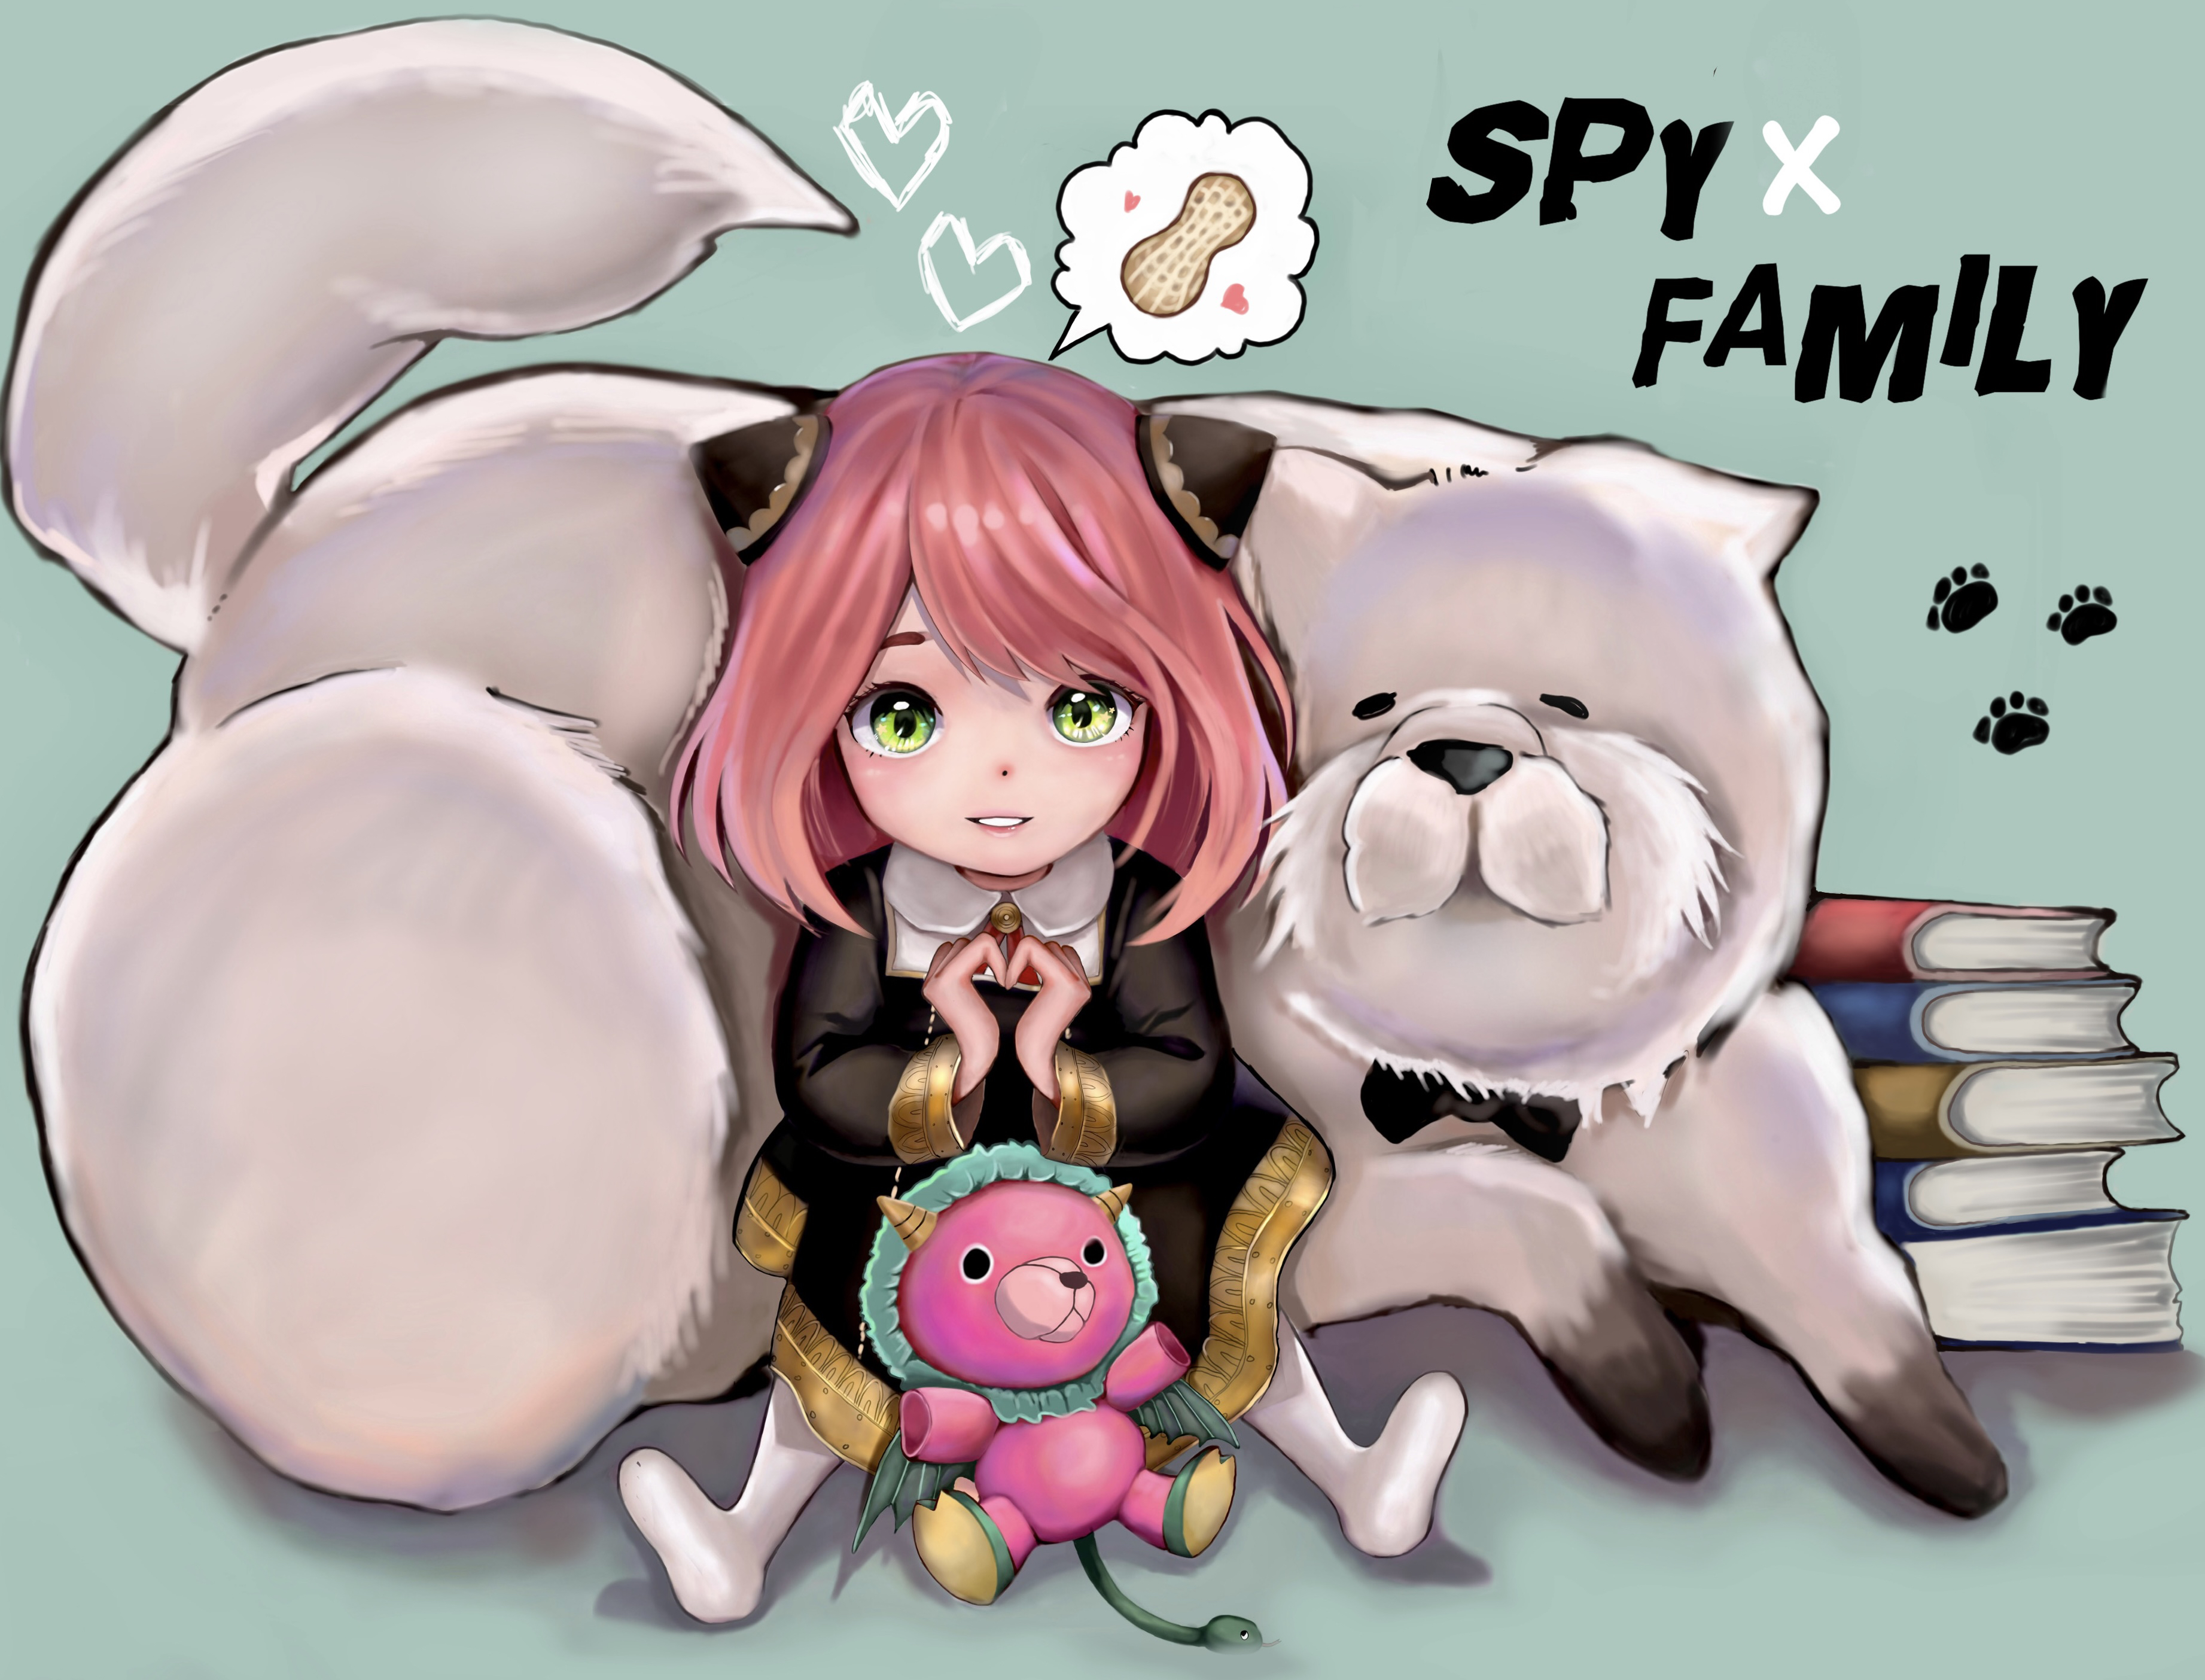 Spy x Family HD Wallpaper by はるいち